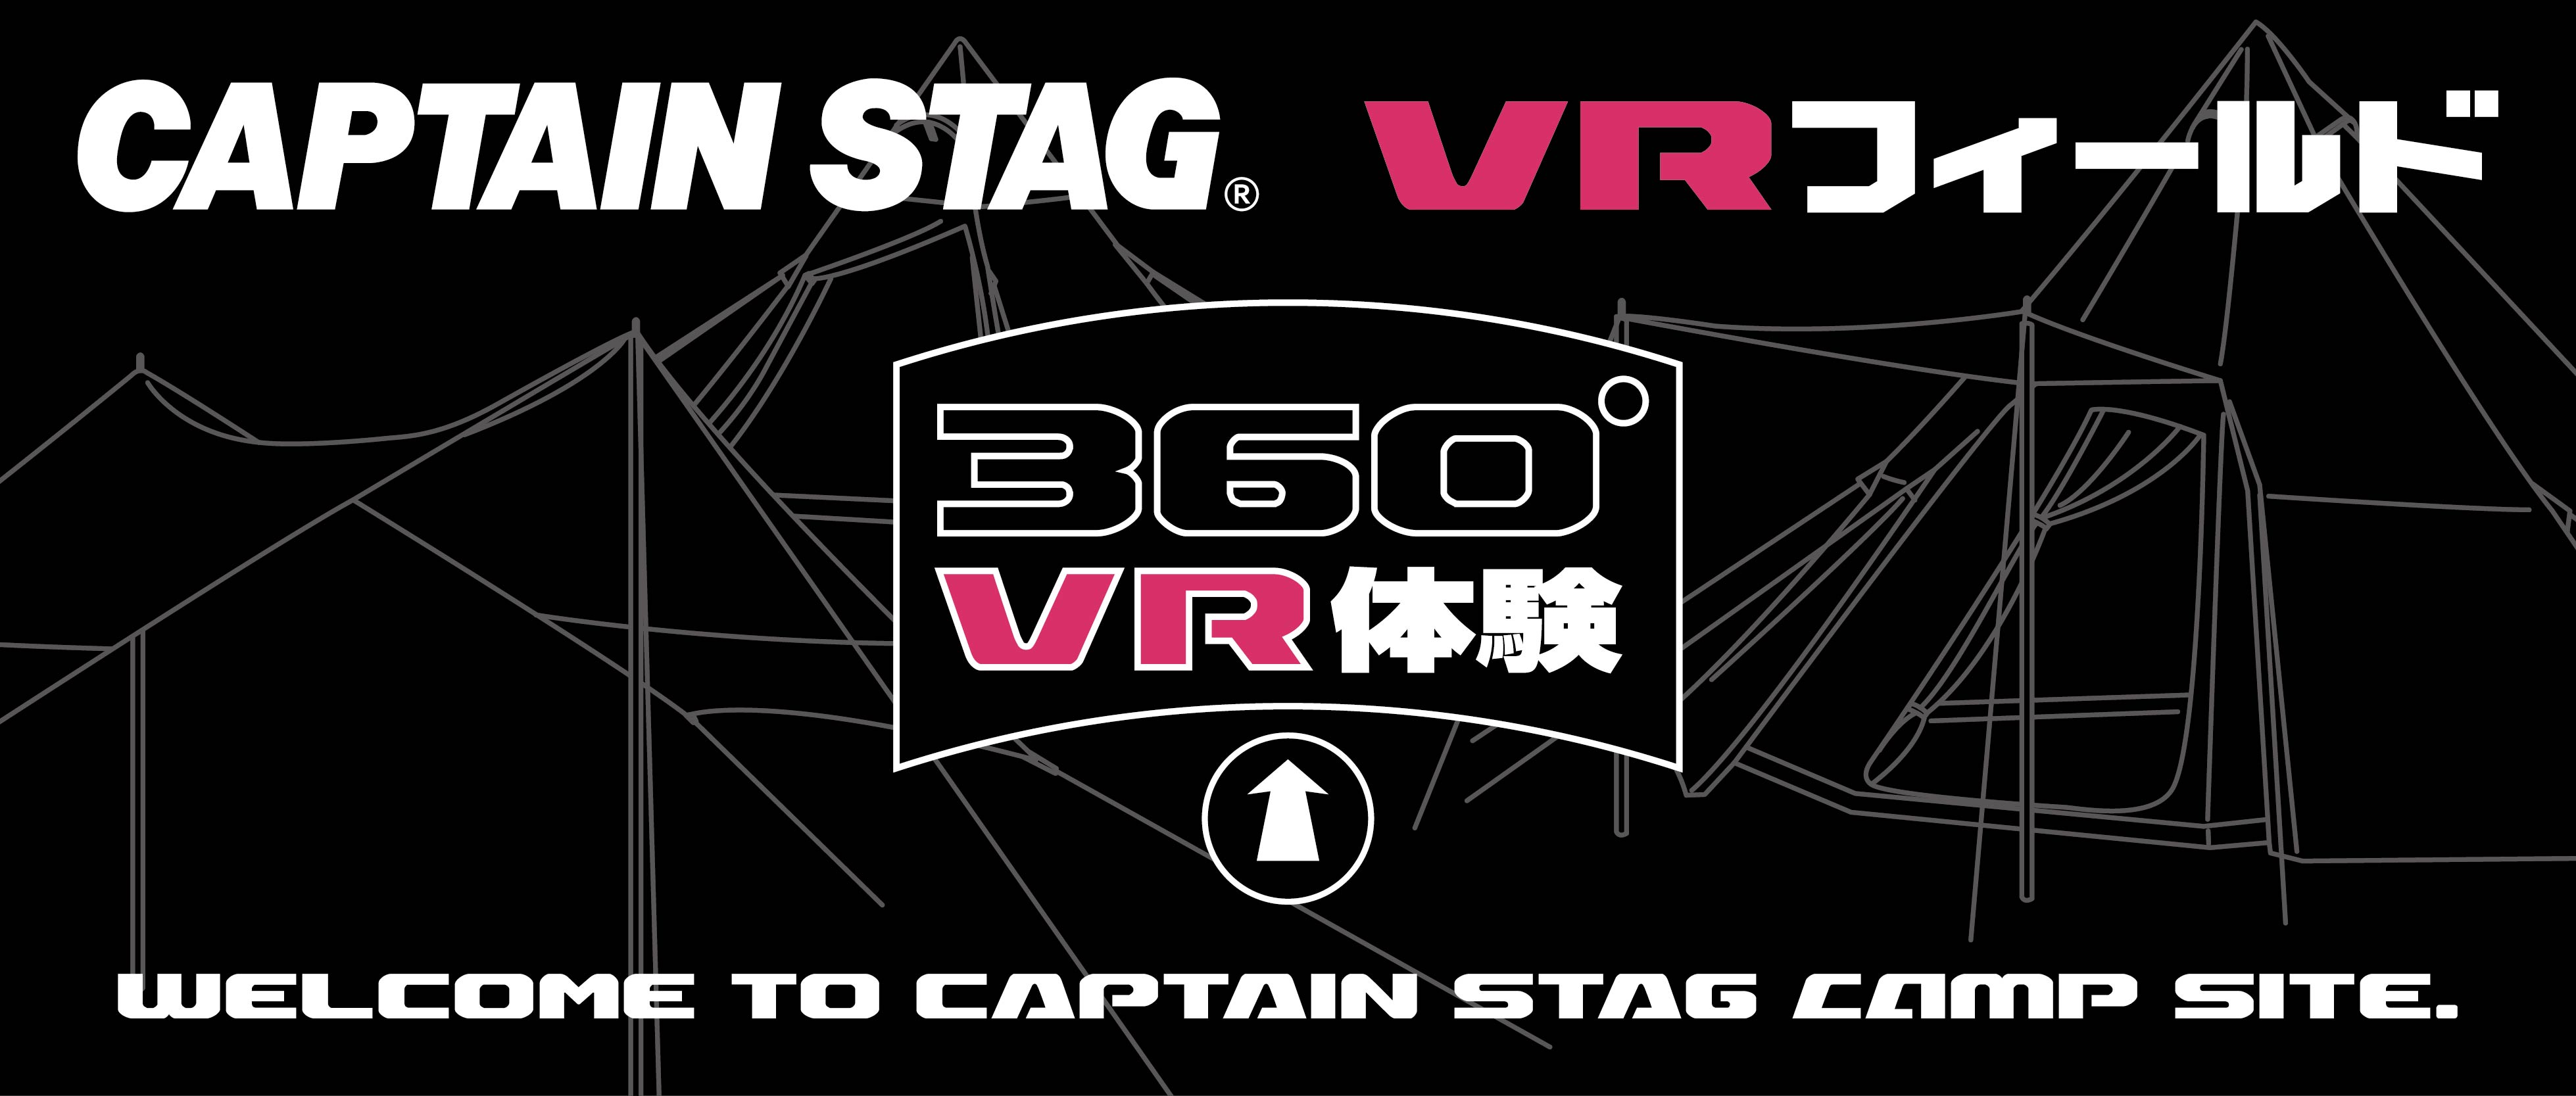 CAPTAIN STAG VRフィールド 360度VR体験